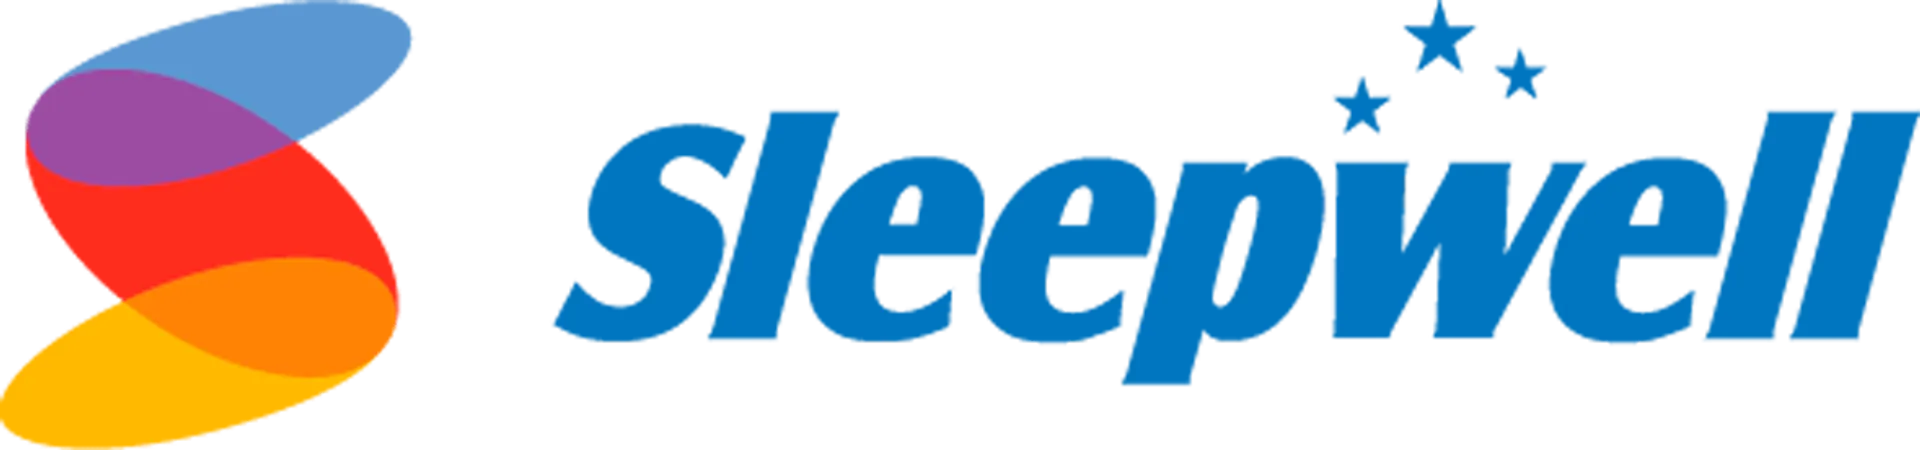 SLEEPWELL logo. Current catalogue